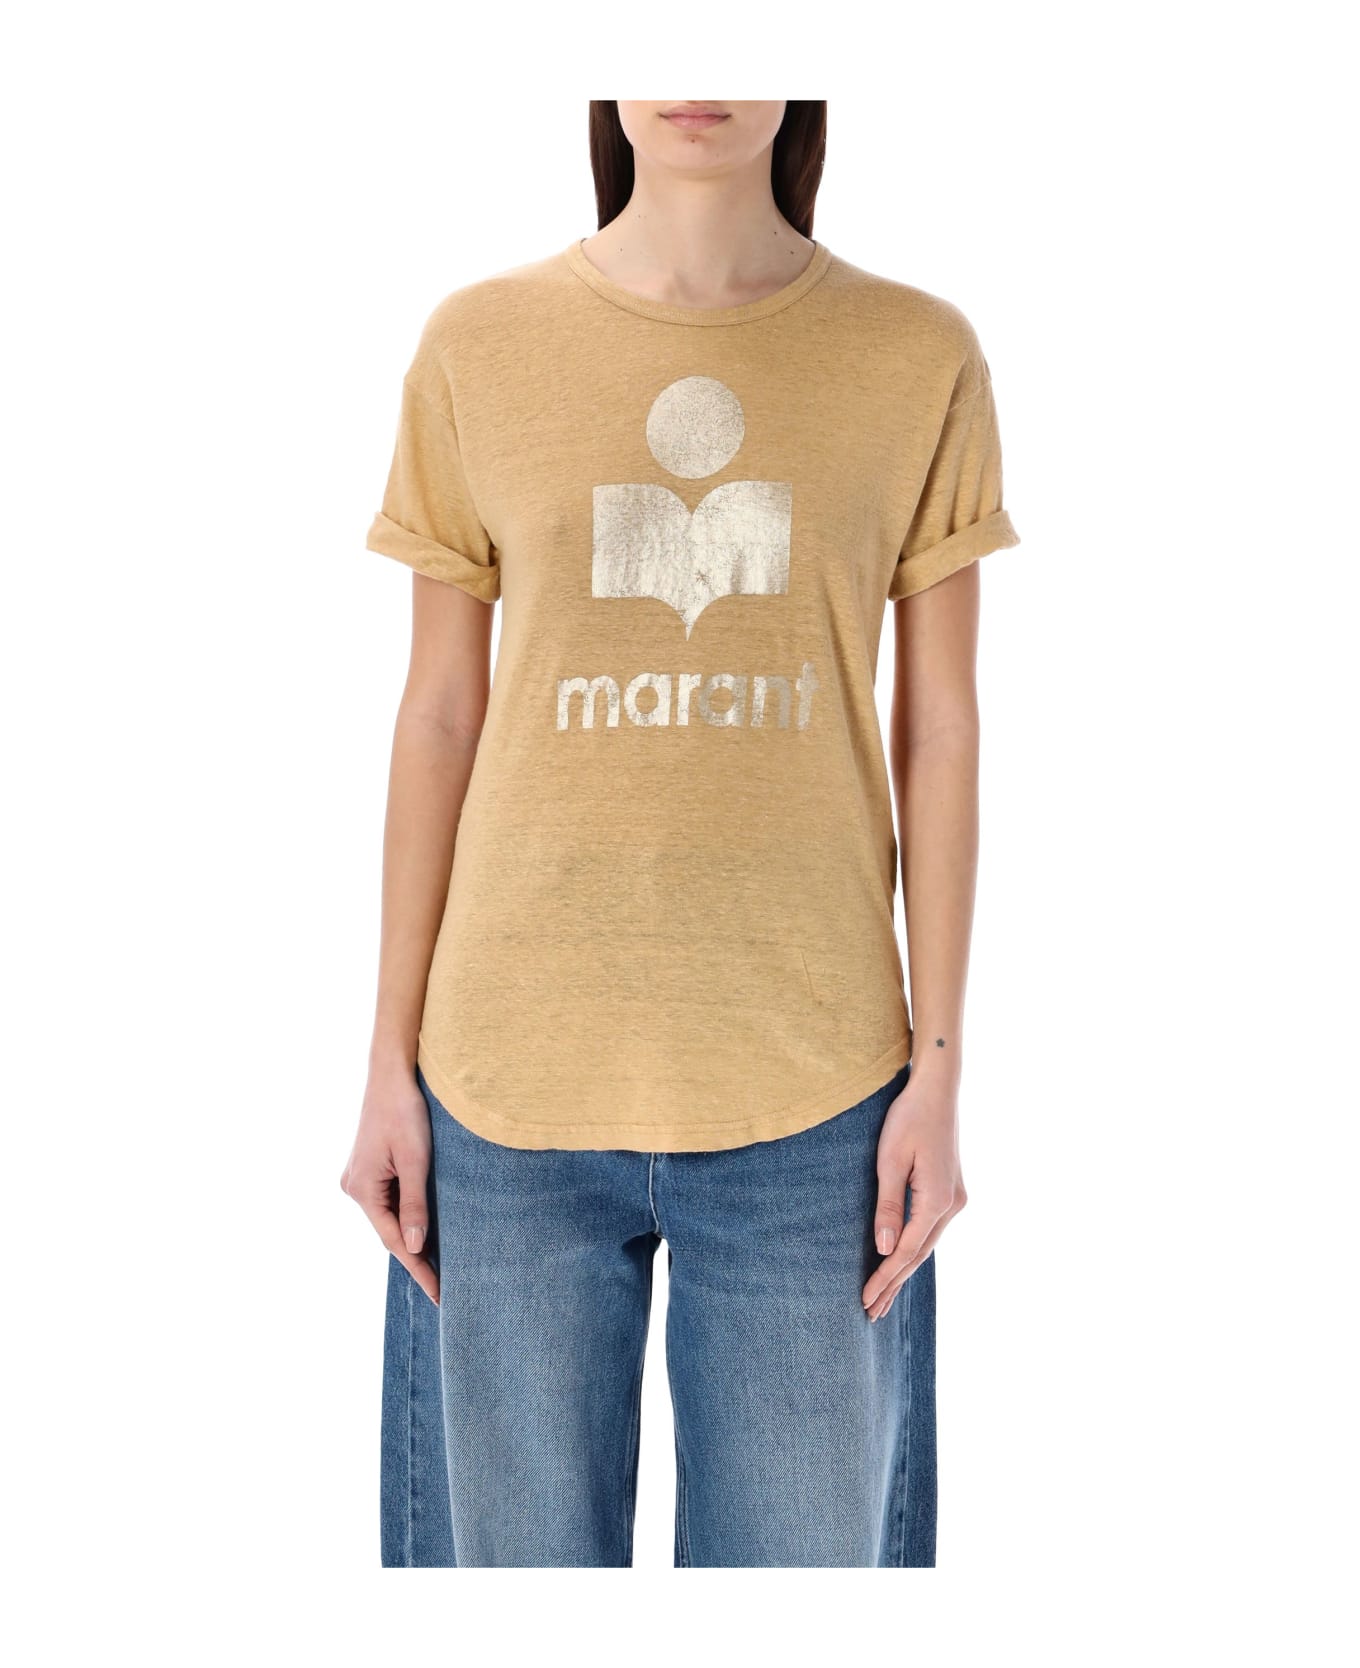 Marant Étoile Koldi T-shirt - SAHARA/LIGHT GOLD